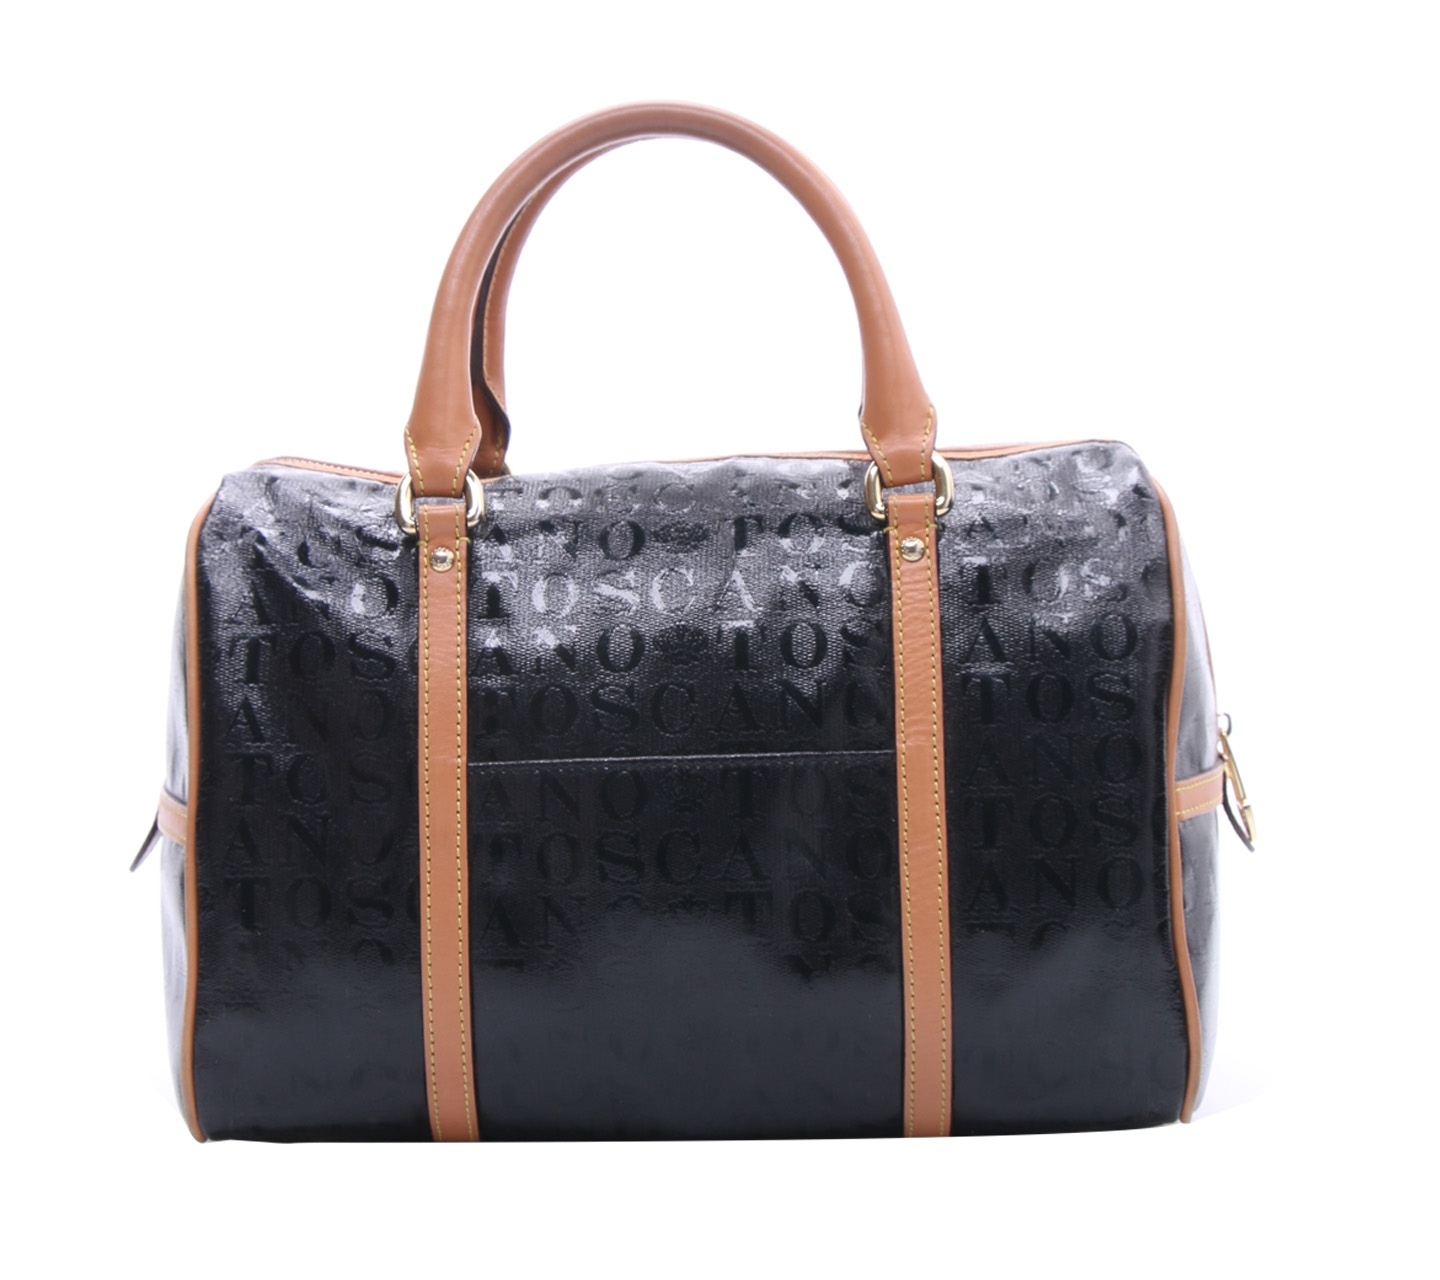 Toscano Black Handbag